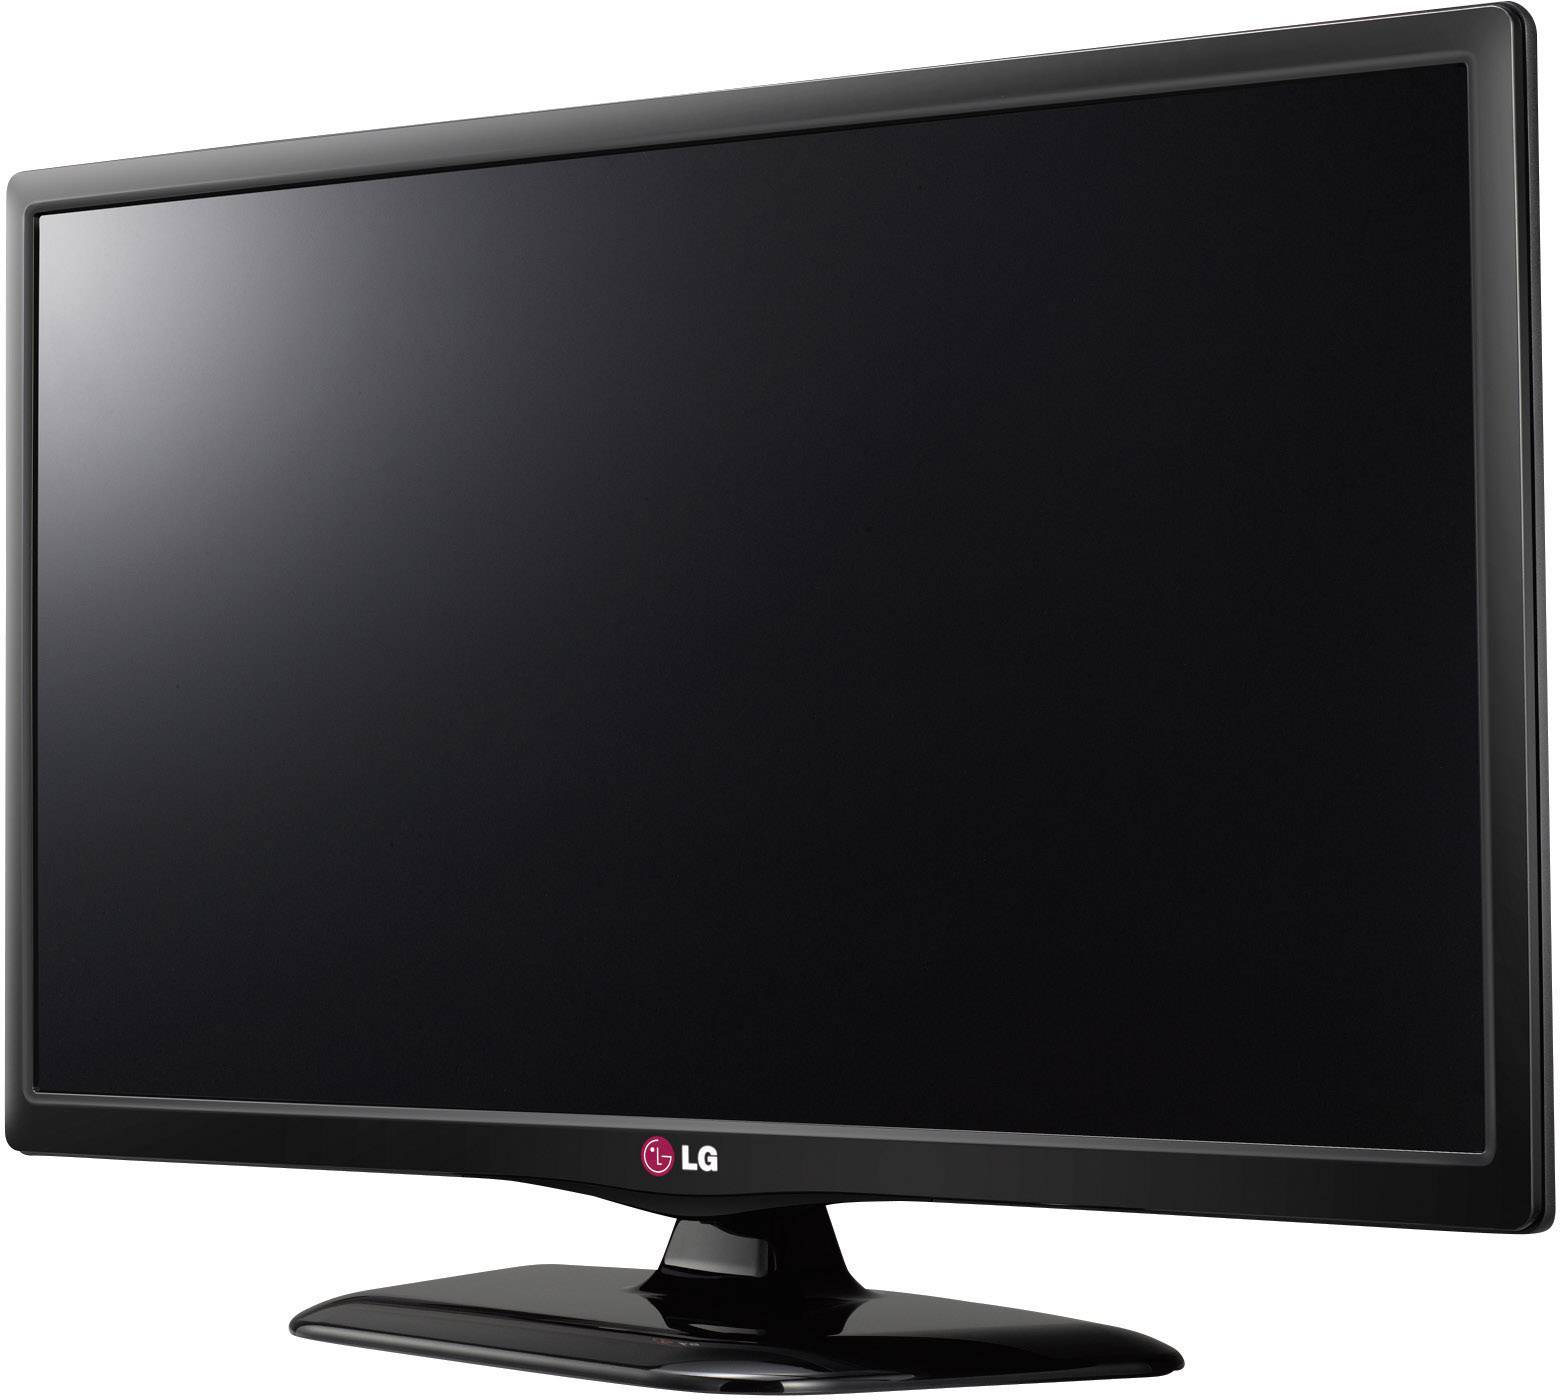 Телевизоры lg 2013 года. LG 28lb450u. Телевизор LG 28lb450u. Телевизор LG 28lb450u 28". Телевизор led 22 LG 22lf450u.